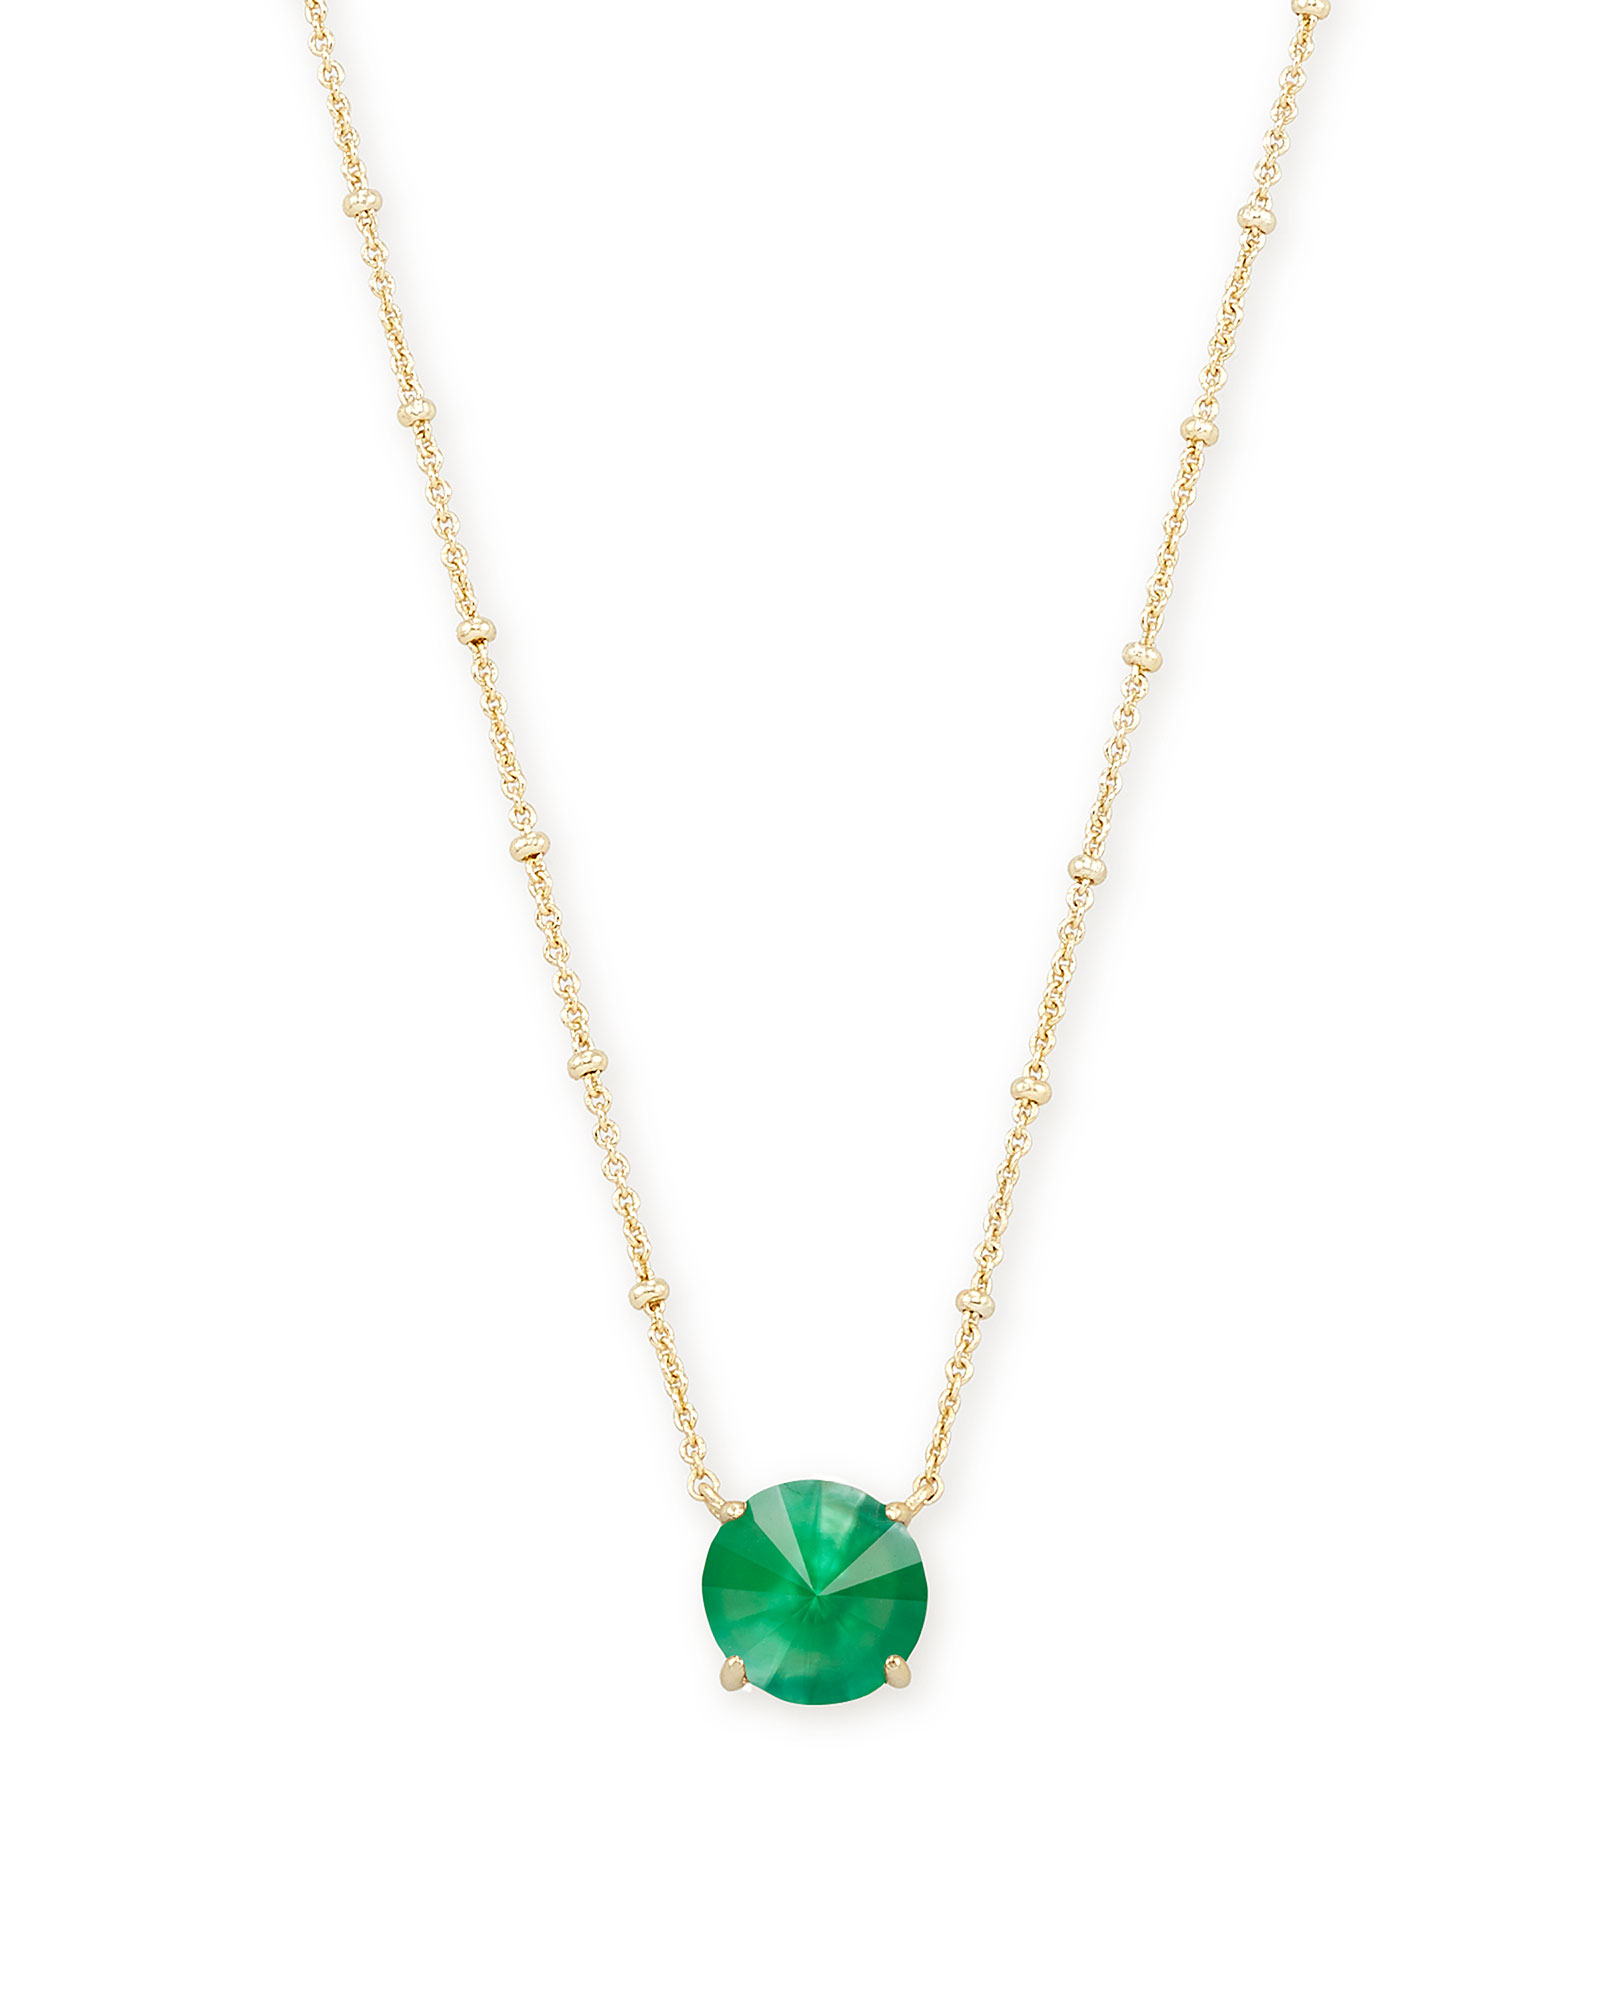 Jolie Gold Pendant Necklace in Jade Green Illusion | Kendra Scott